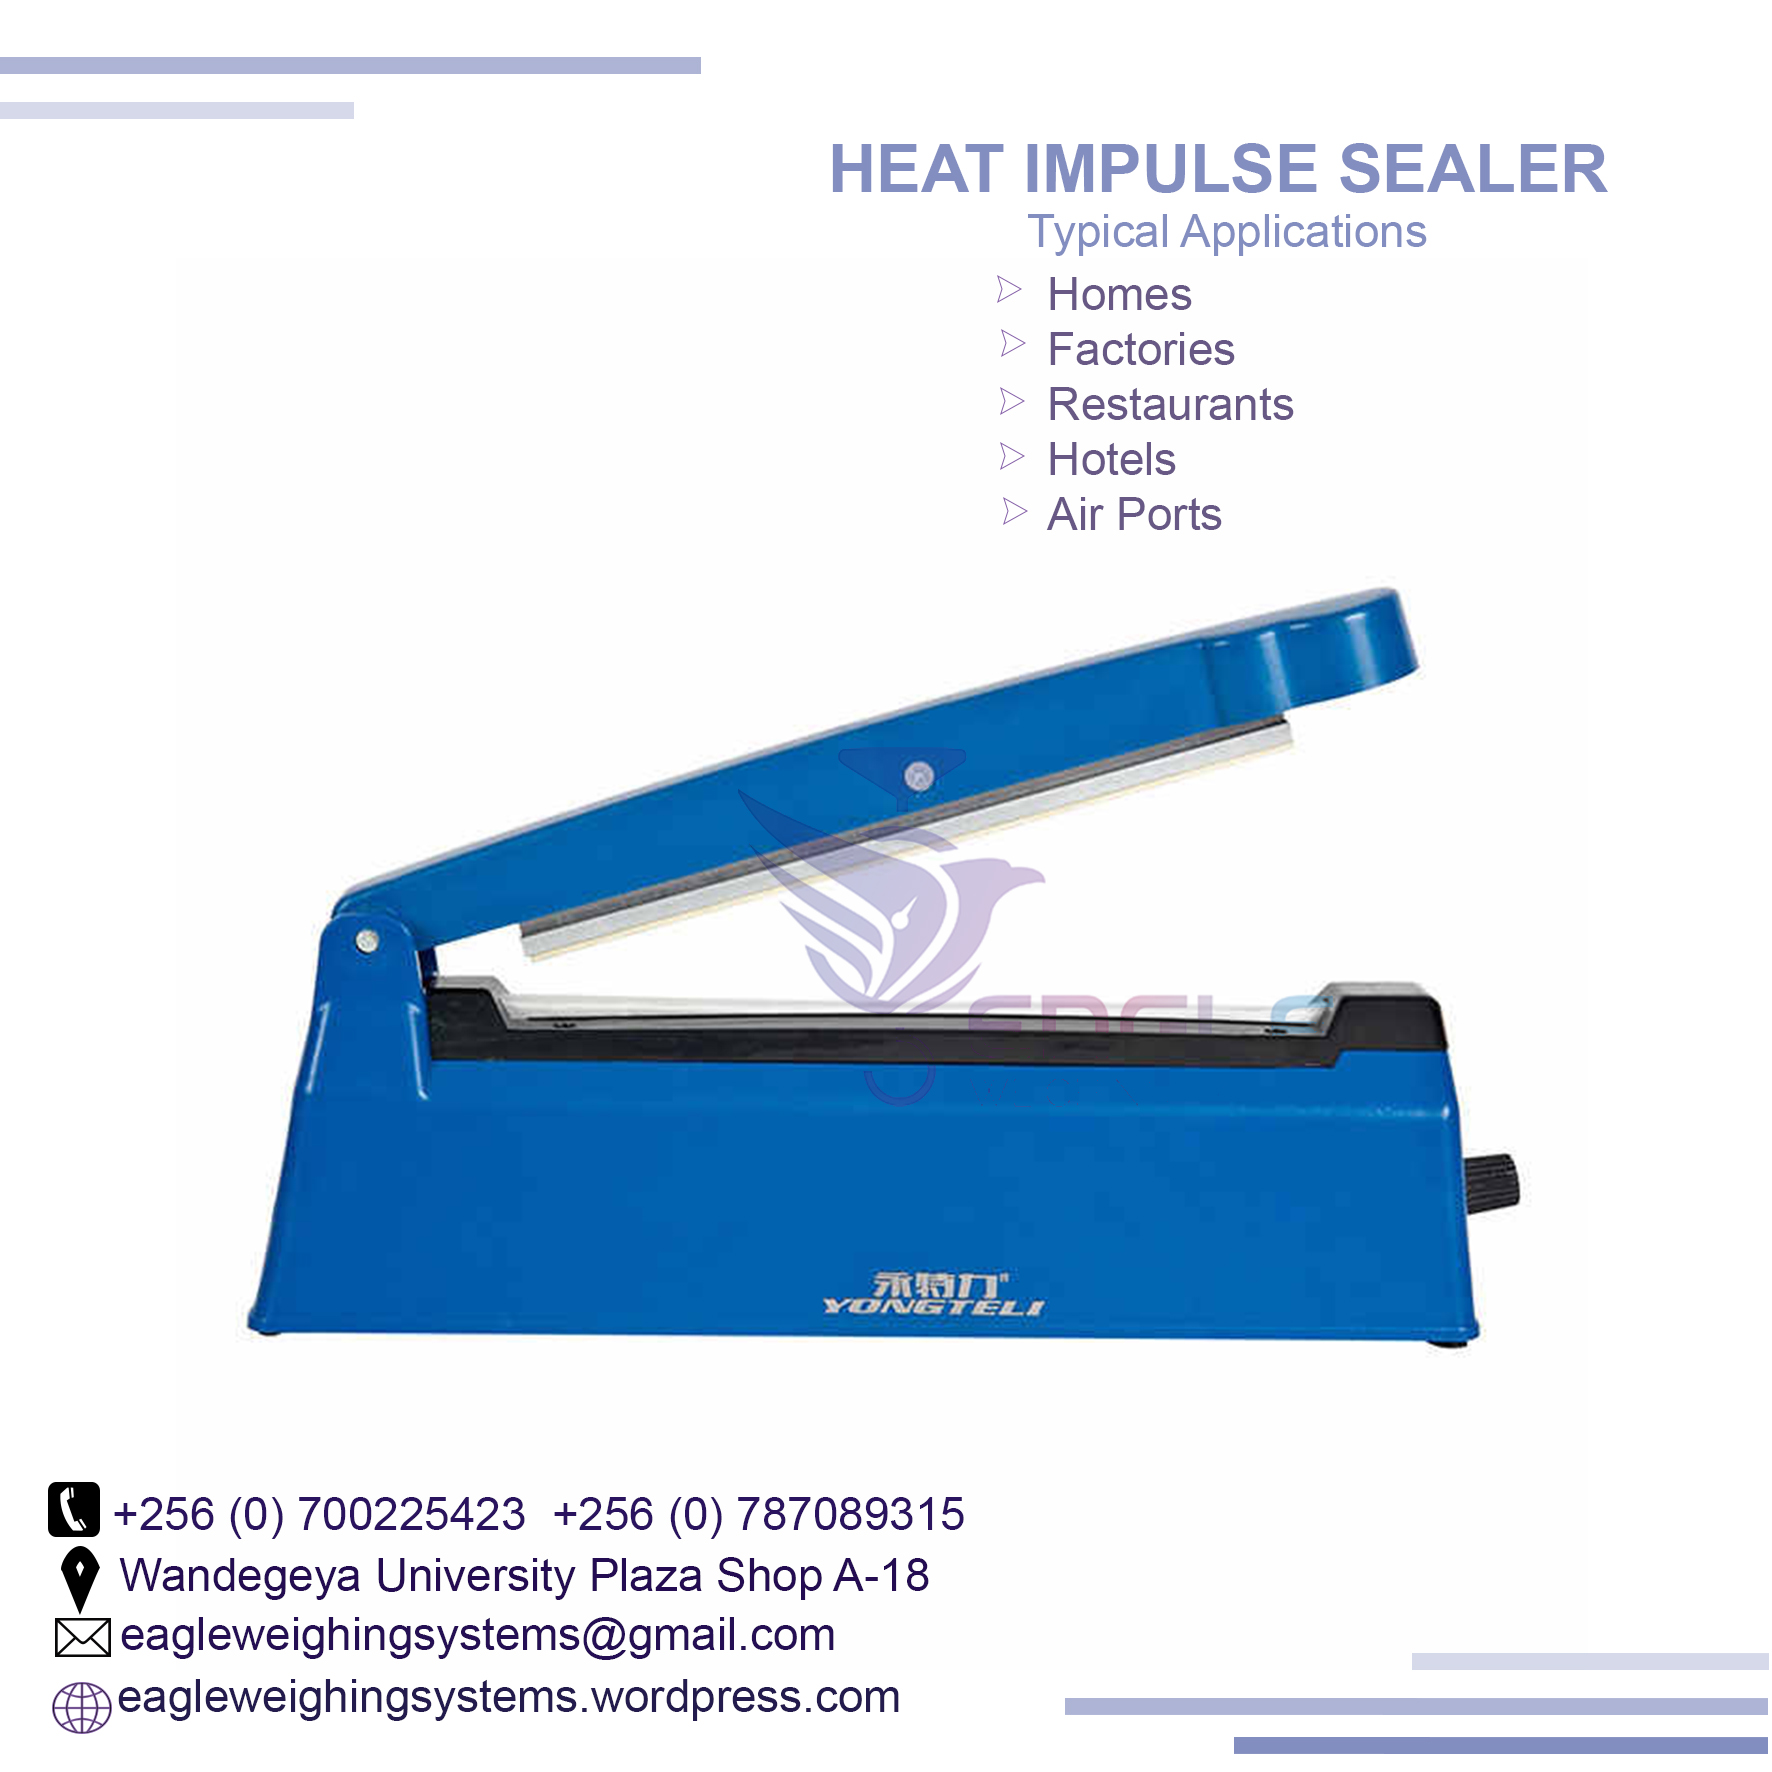 Machine Portable Heat Hand Impulse Sealer Plastic Type Impulse Sealer, Kampala Central Division, Central, Uganda